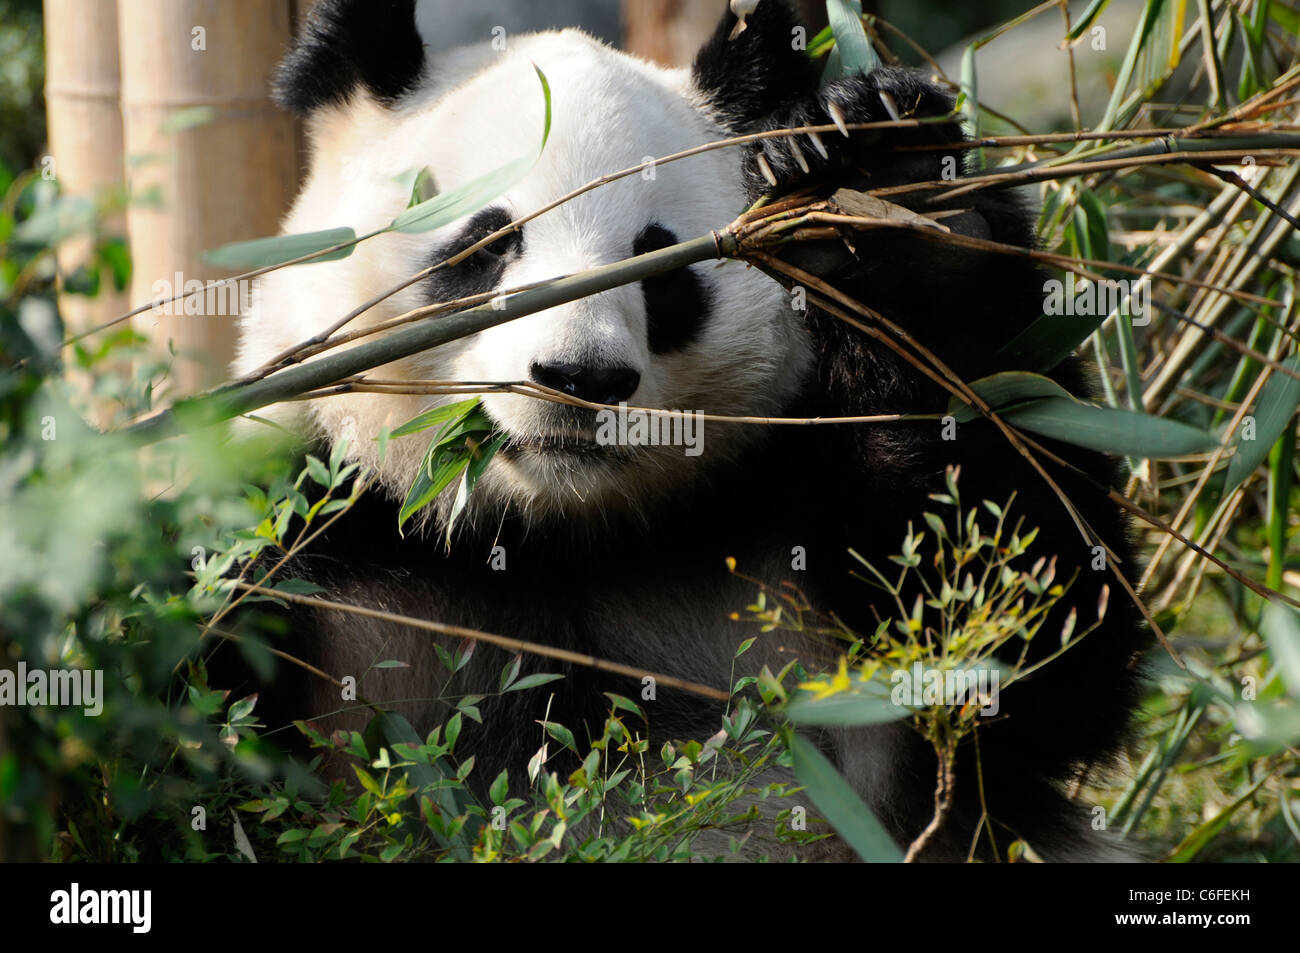 Panda gigante (Ailuropoda melanoleuca) mangiando bambù, nella provincia di Sichuan, in Cina Foto Stock